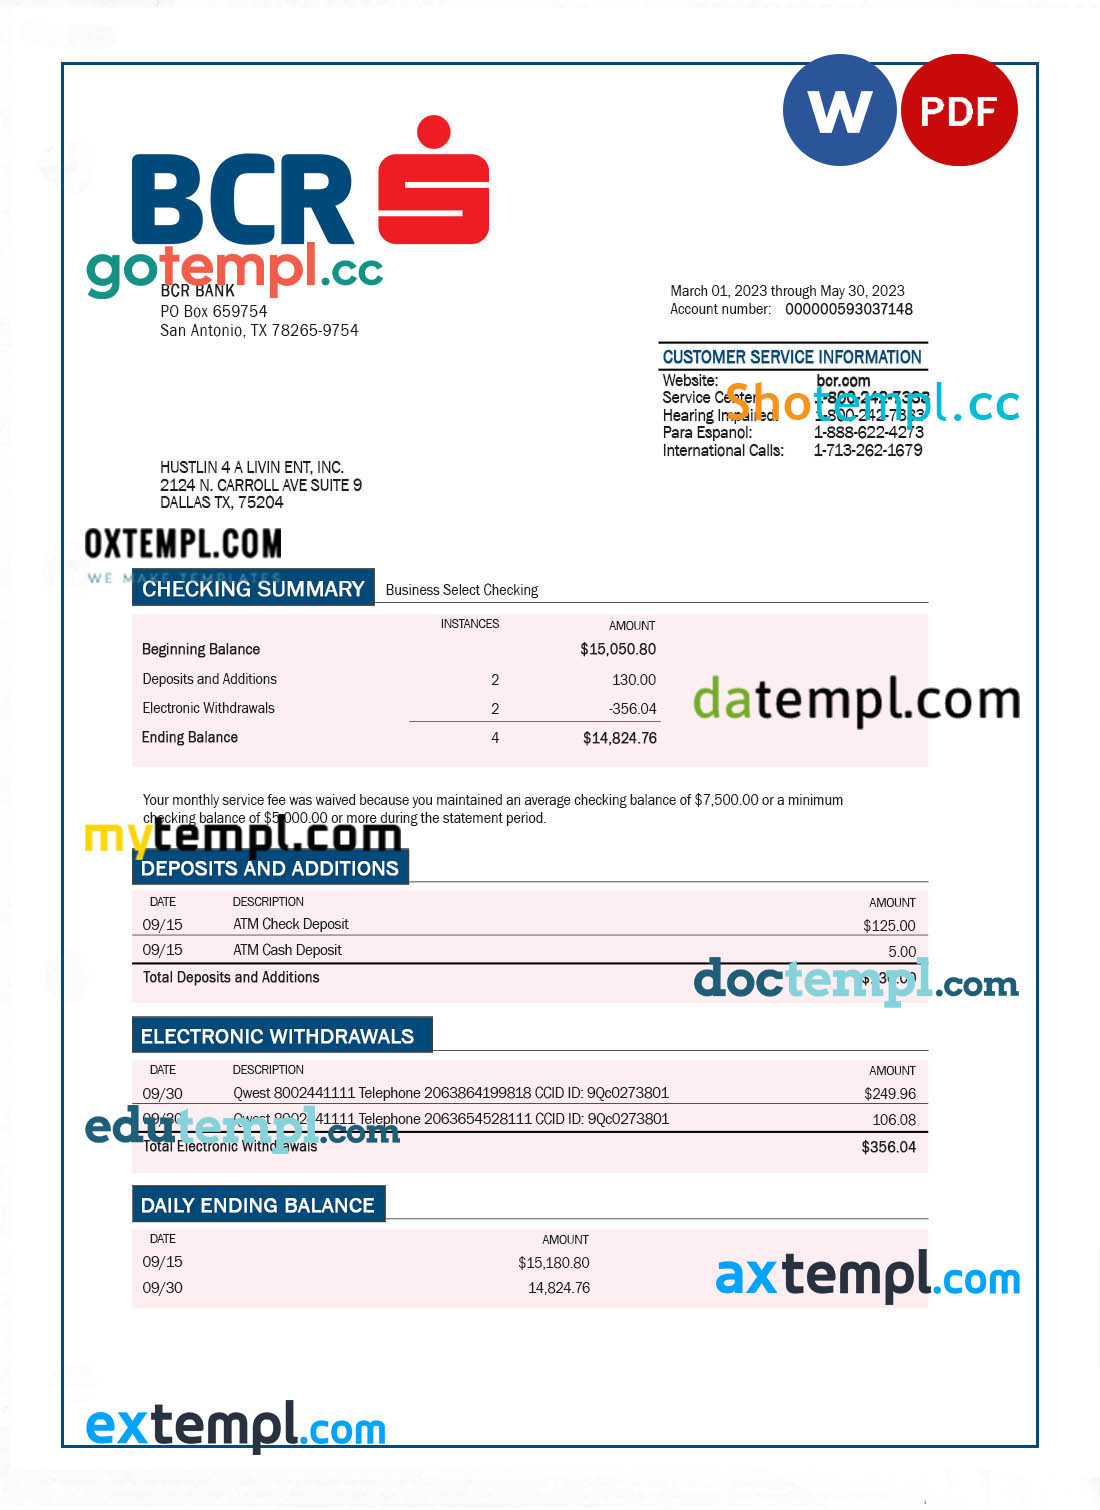 Jordan Commercial Bank JCB bank mastercard, fully editable template in PSD format